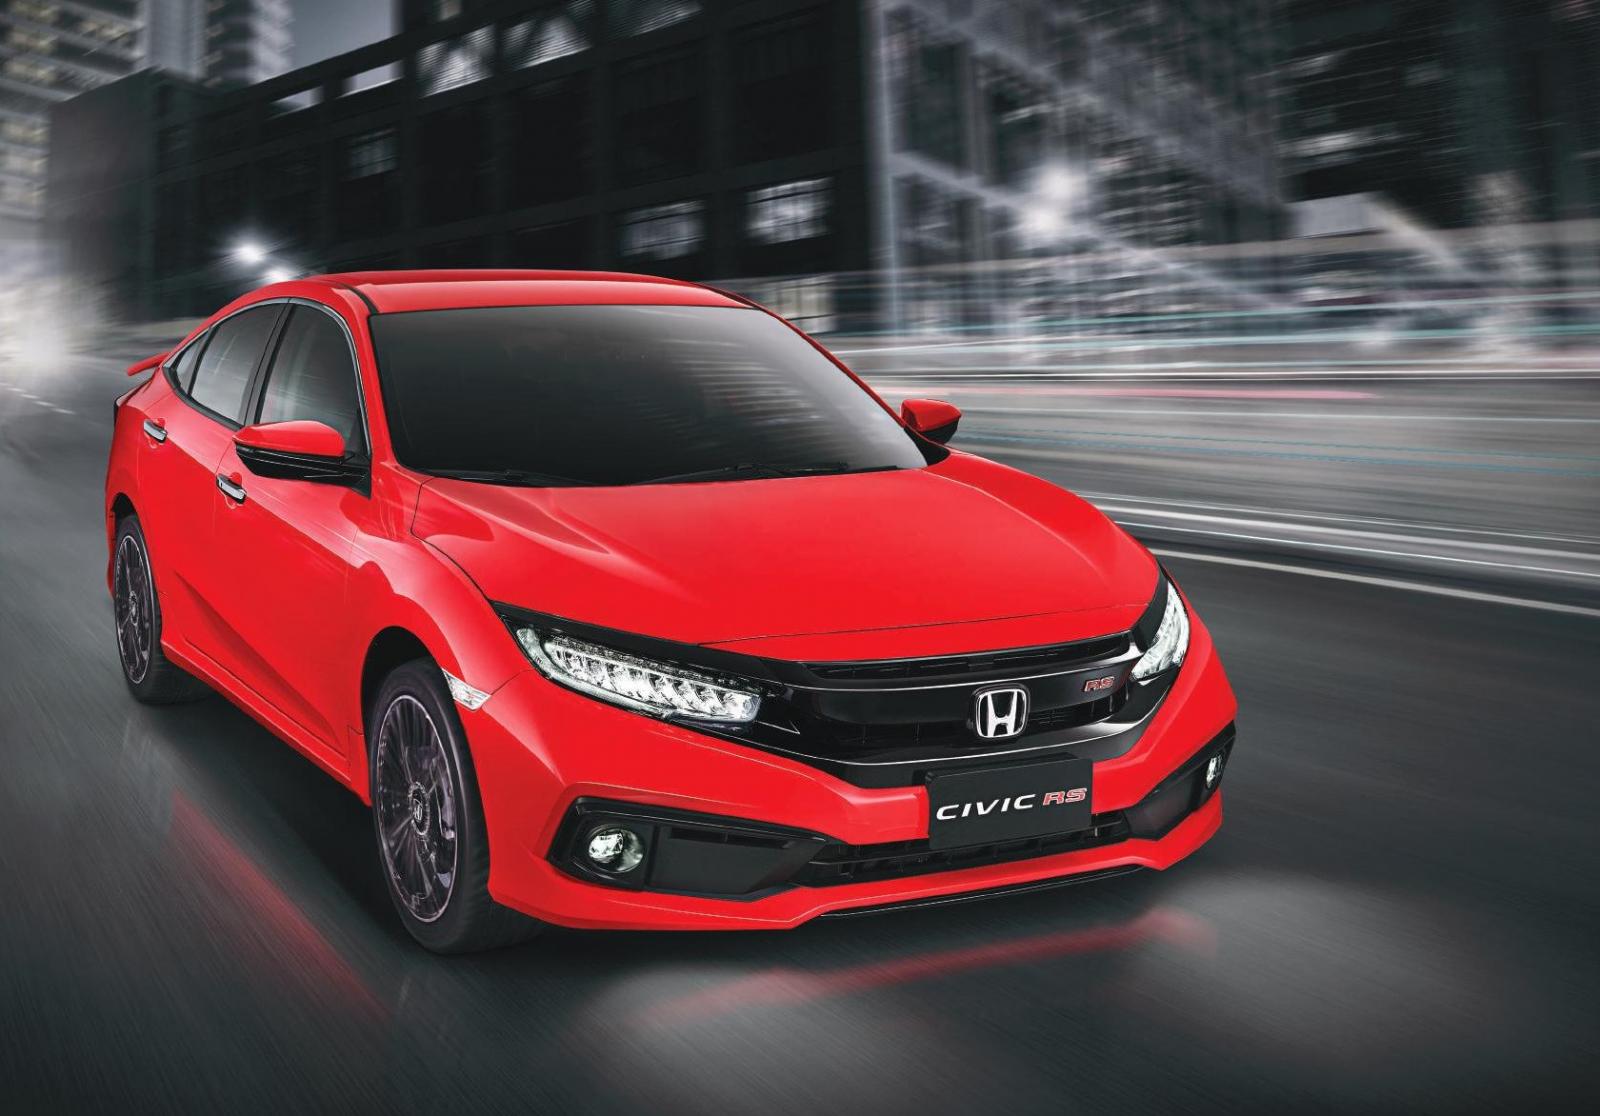 Honda Civic 2019 Price Philippines: Absolute comfort in compact sedan